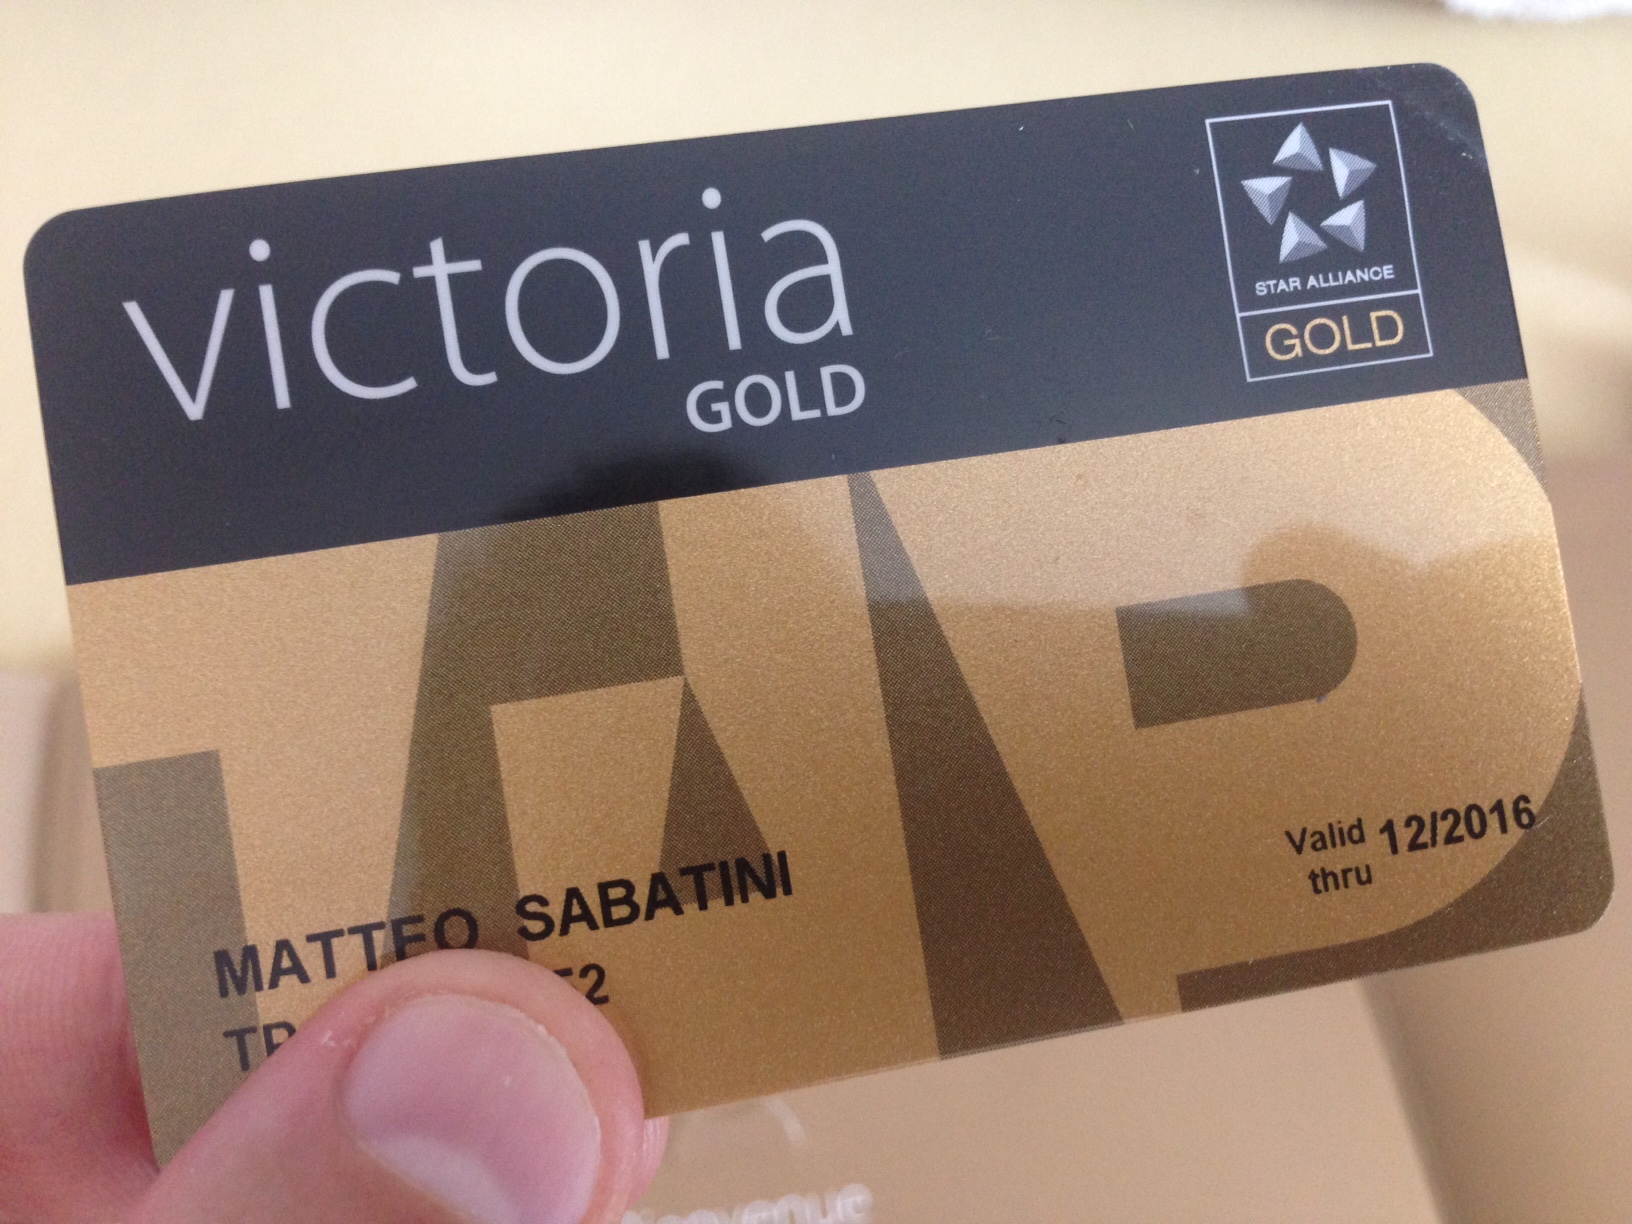 tap victoria gold